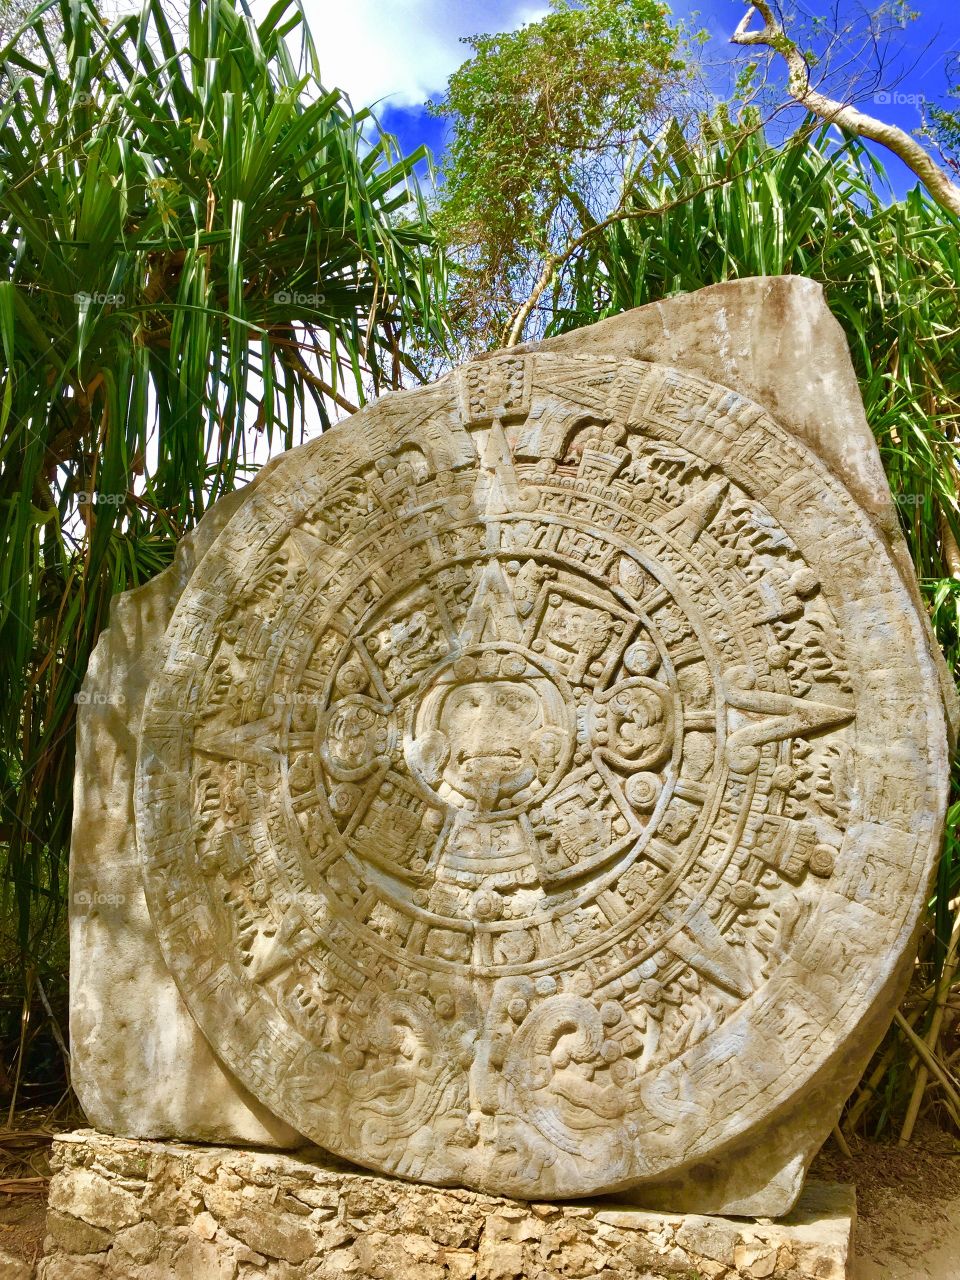 Mayan calendar in Cozumel, Mexico 